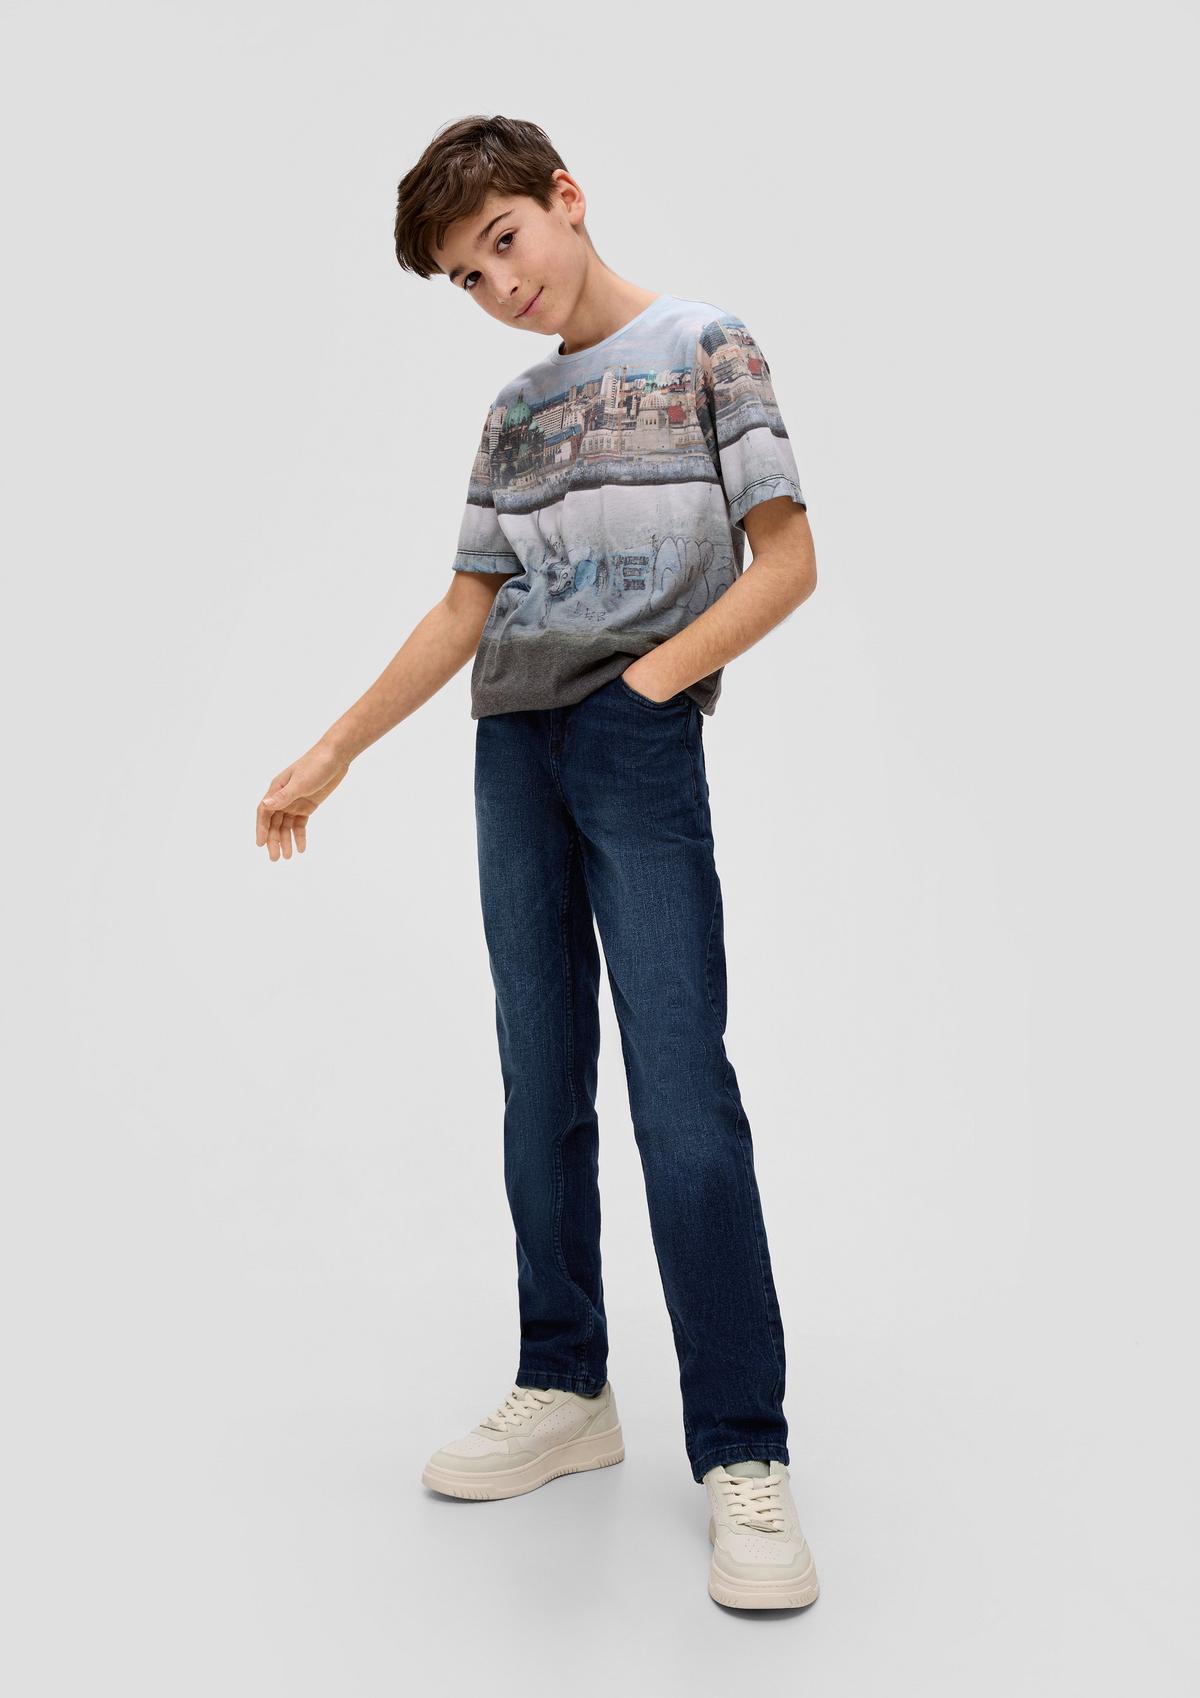 Jeans Seattle / regular fit / mid rise / slim leg